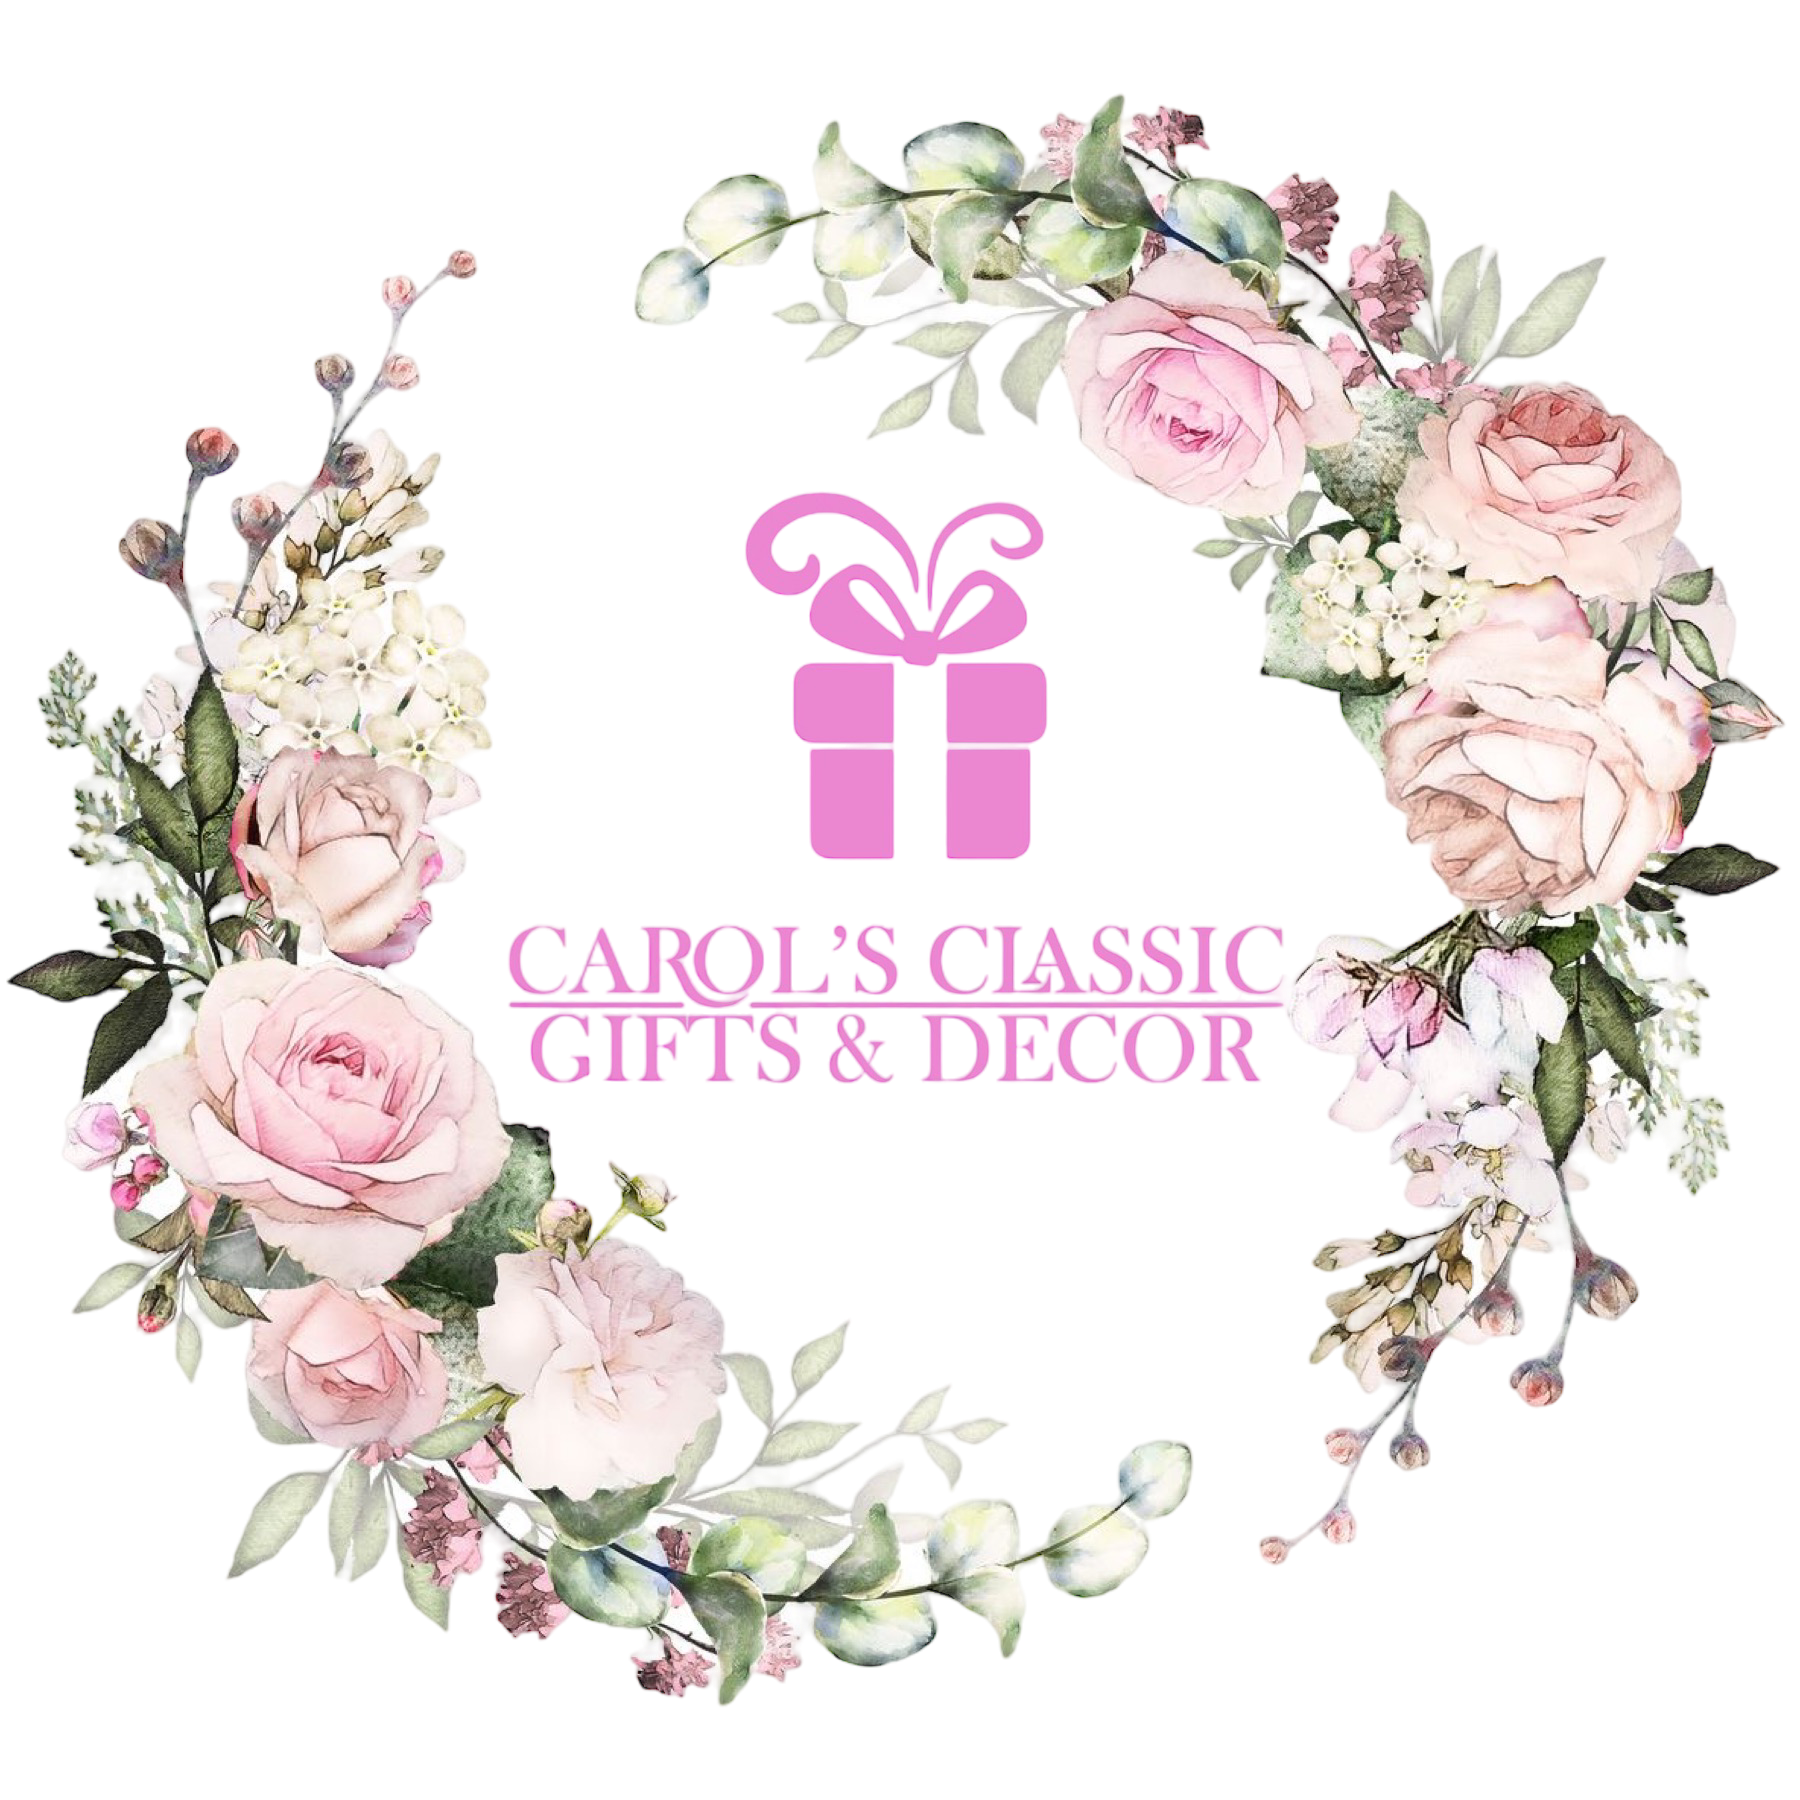 Carol’s Classic Gifts & Decor 